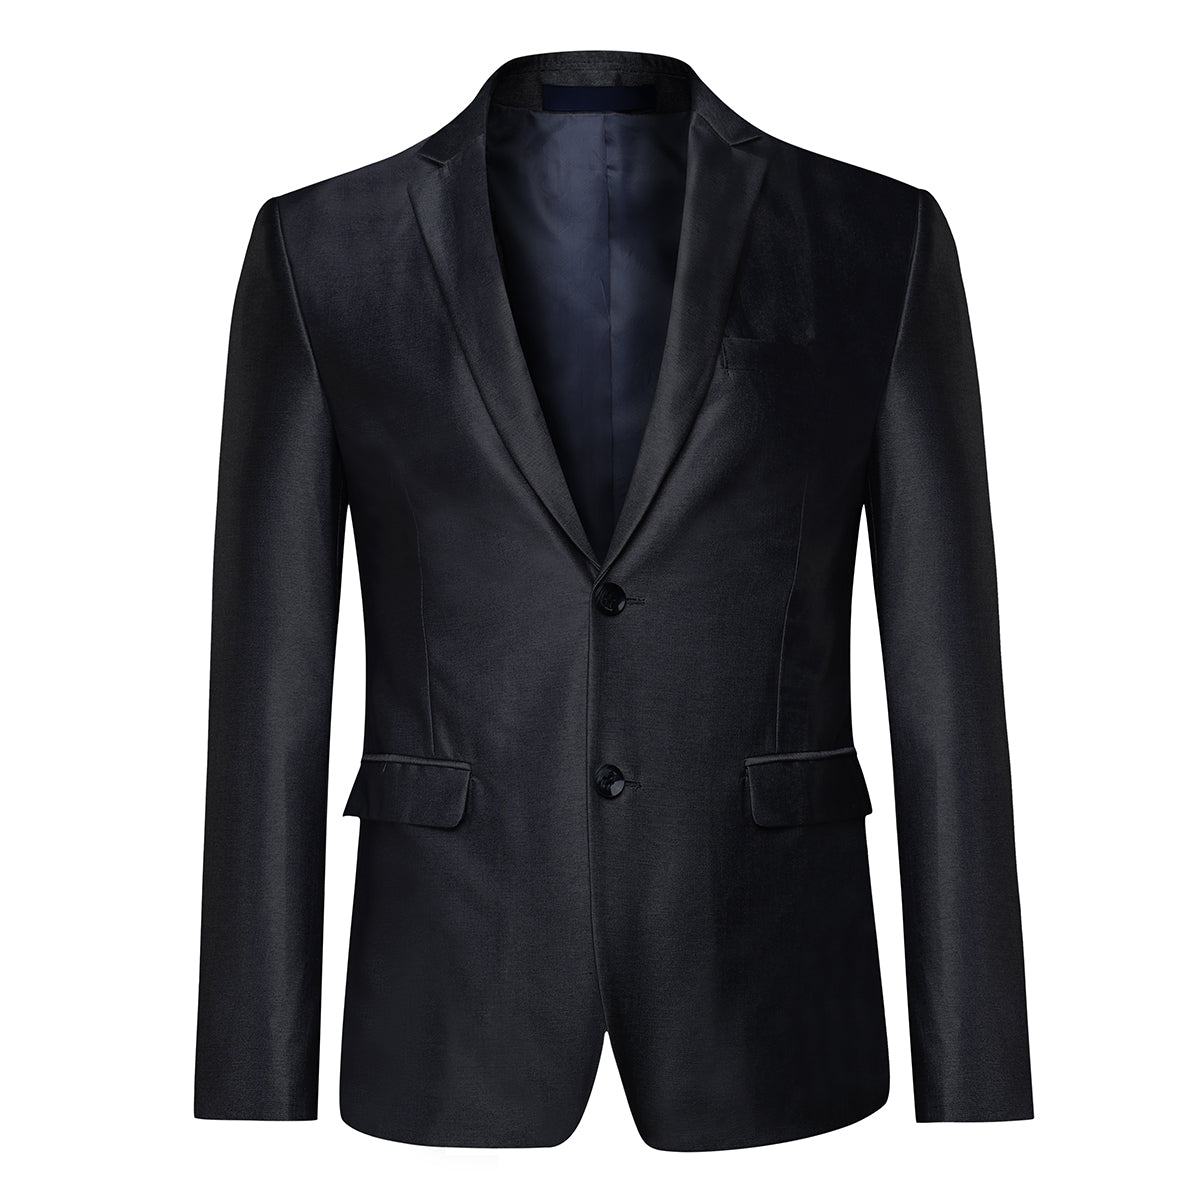 Slim Fit 2 Piece Suit 2 Button Formal Business Wedding Solid Suits Bright Black